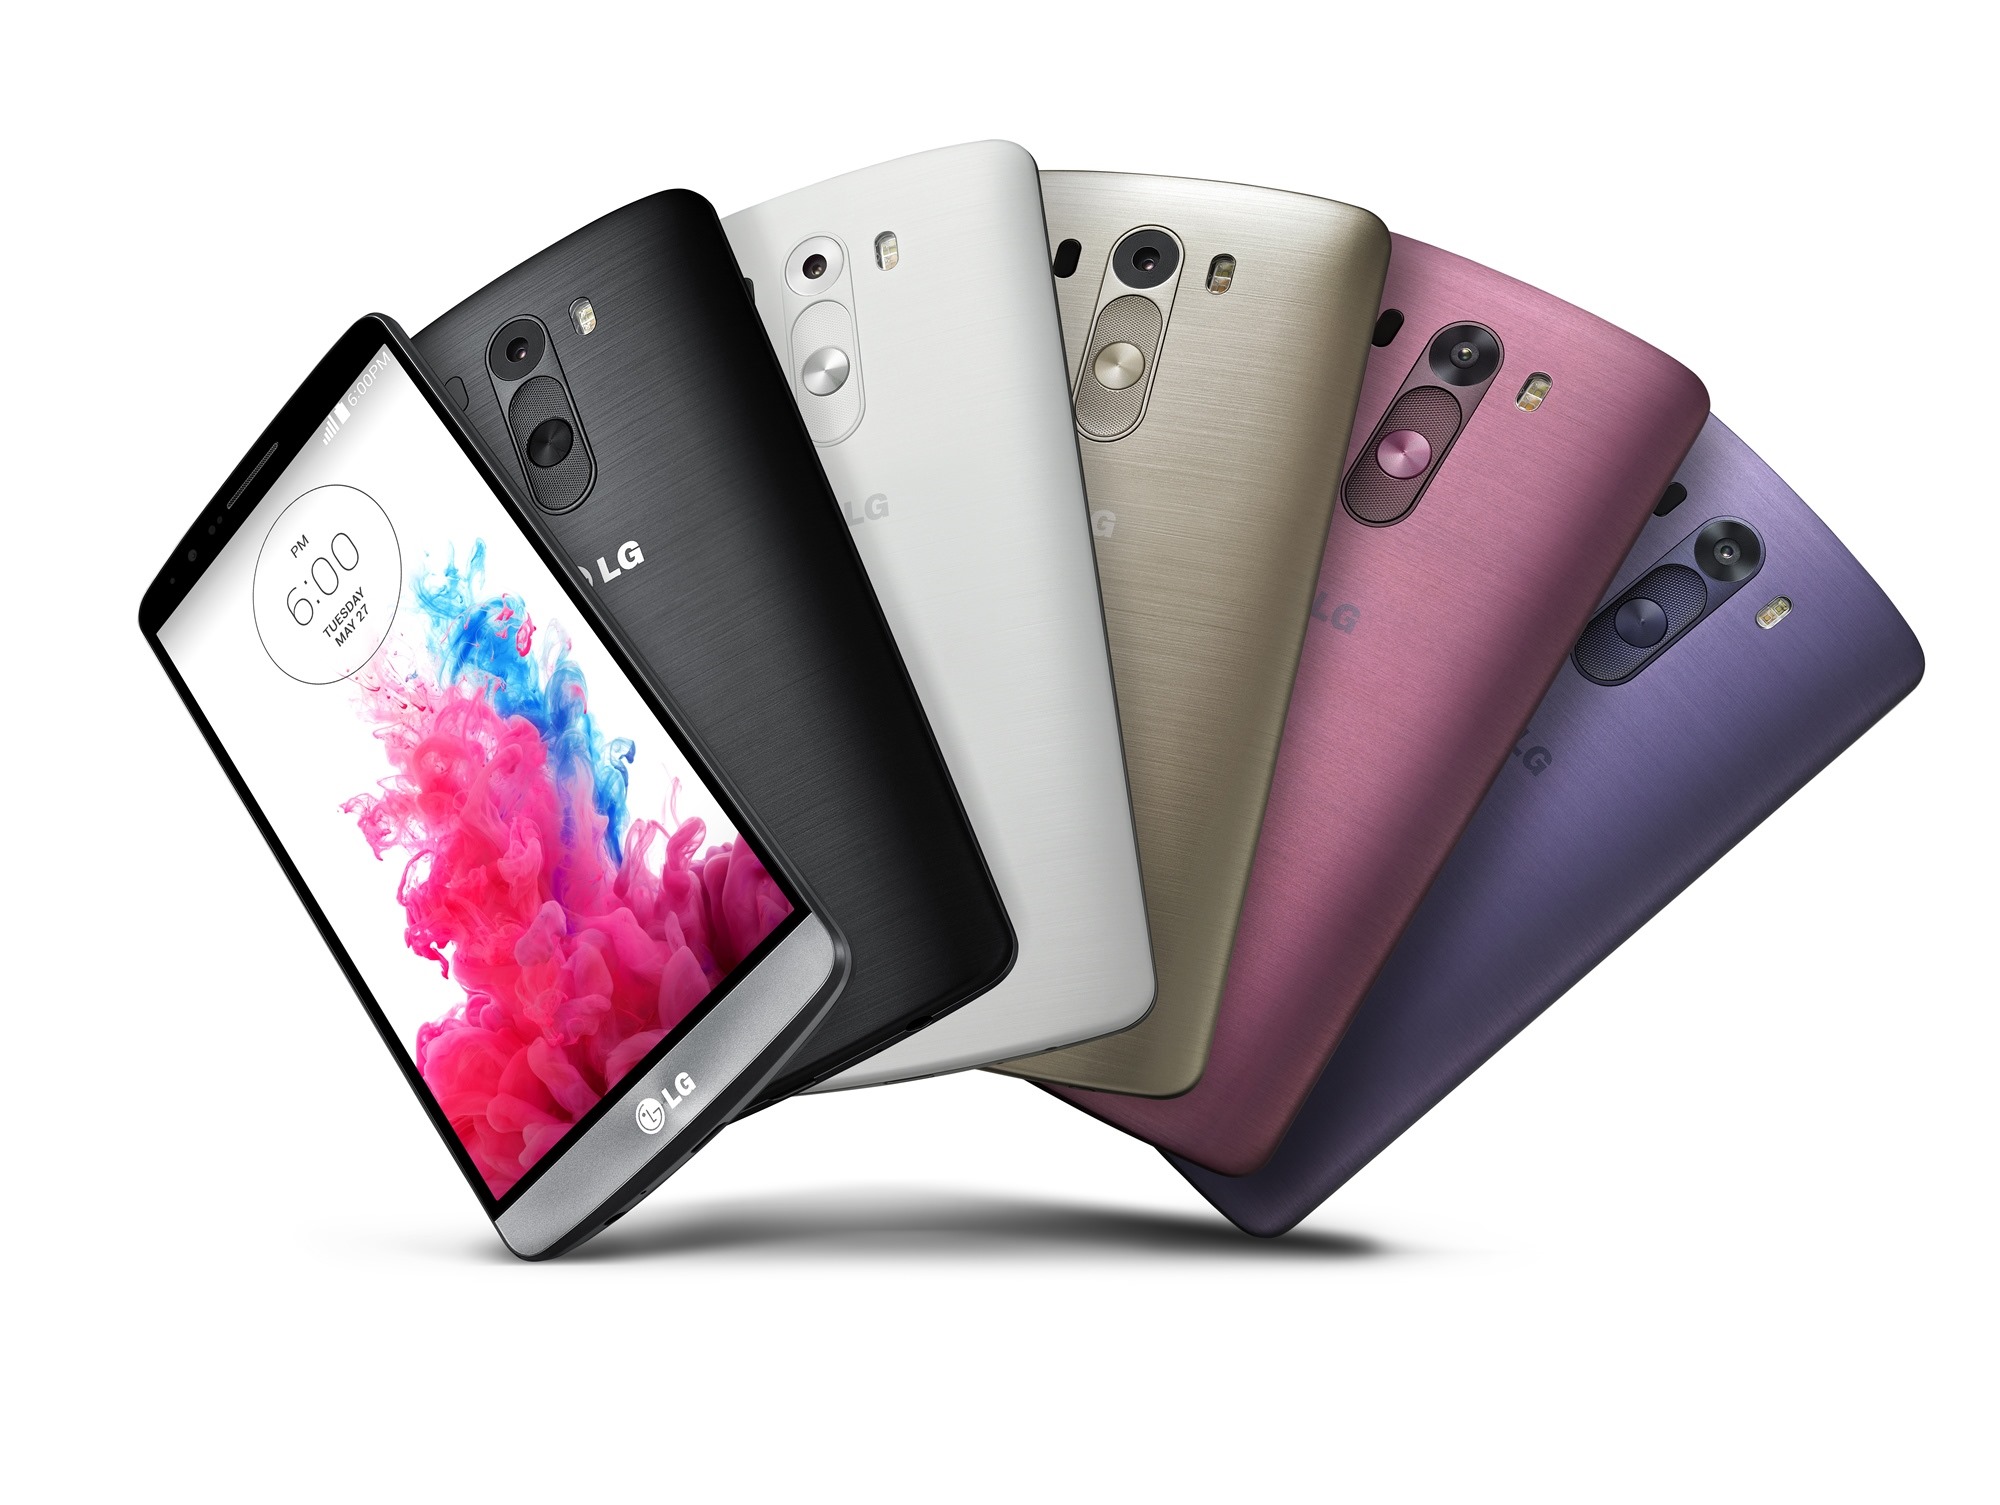 LG-G3-Smartphone-Unveiled